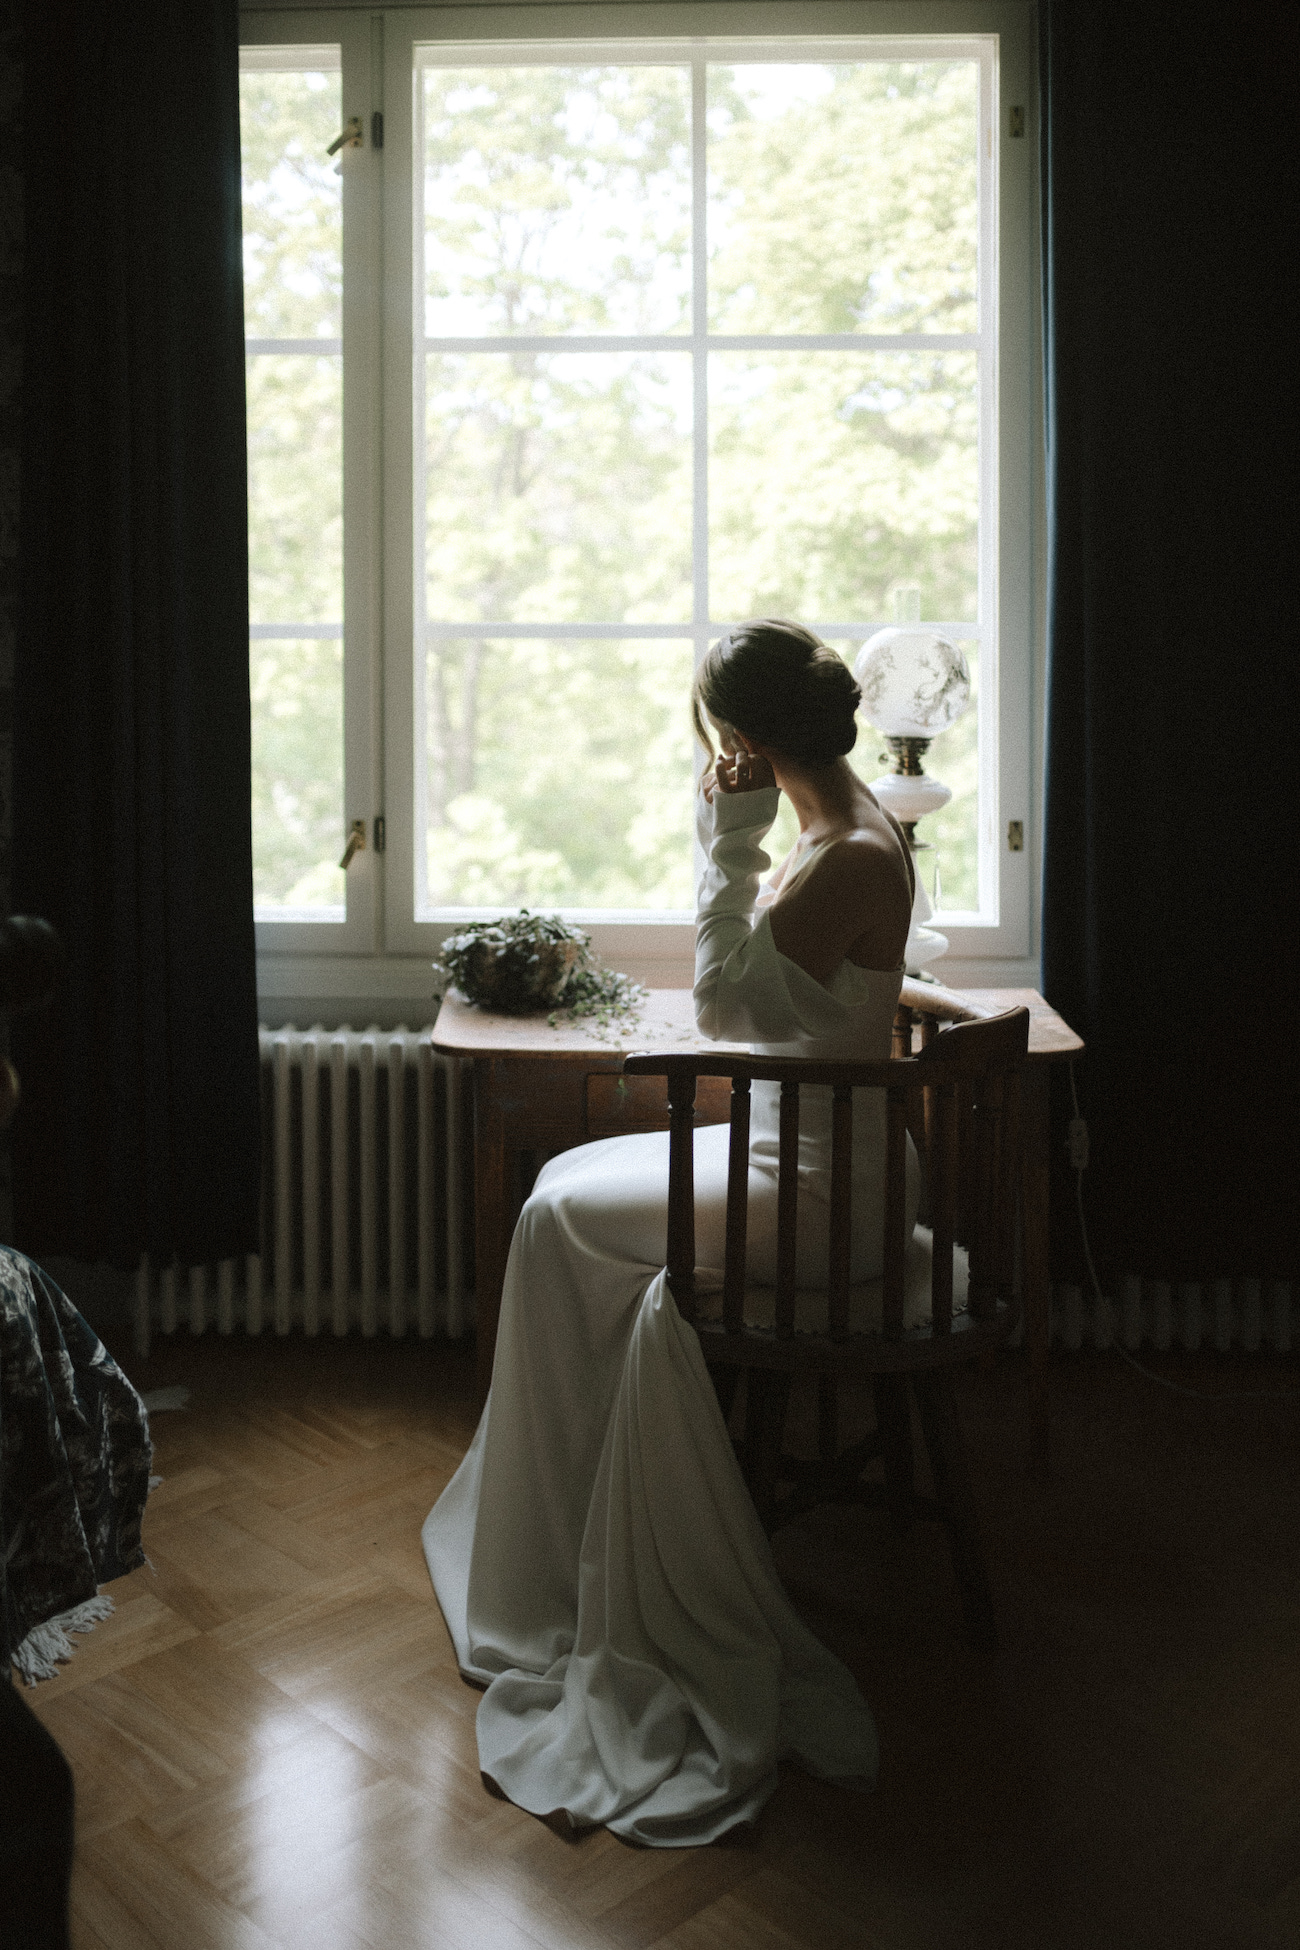 Romance printanière en Finlande - Blog Mariage Madame C